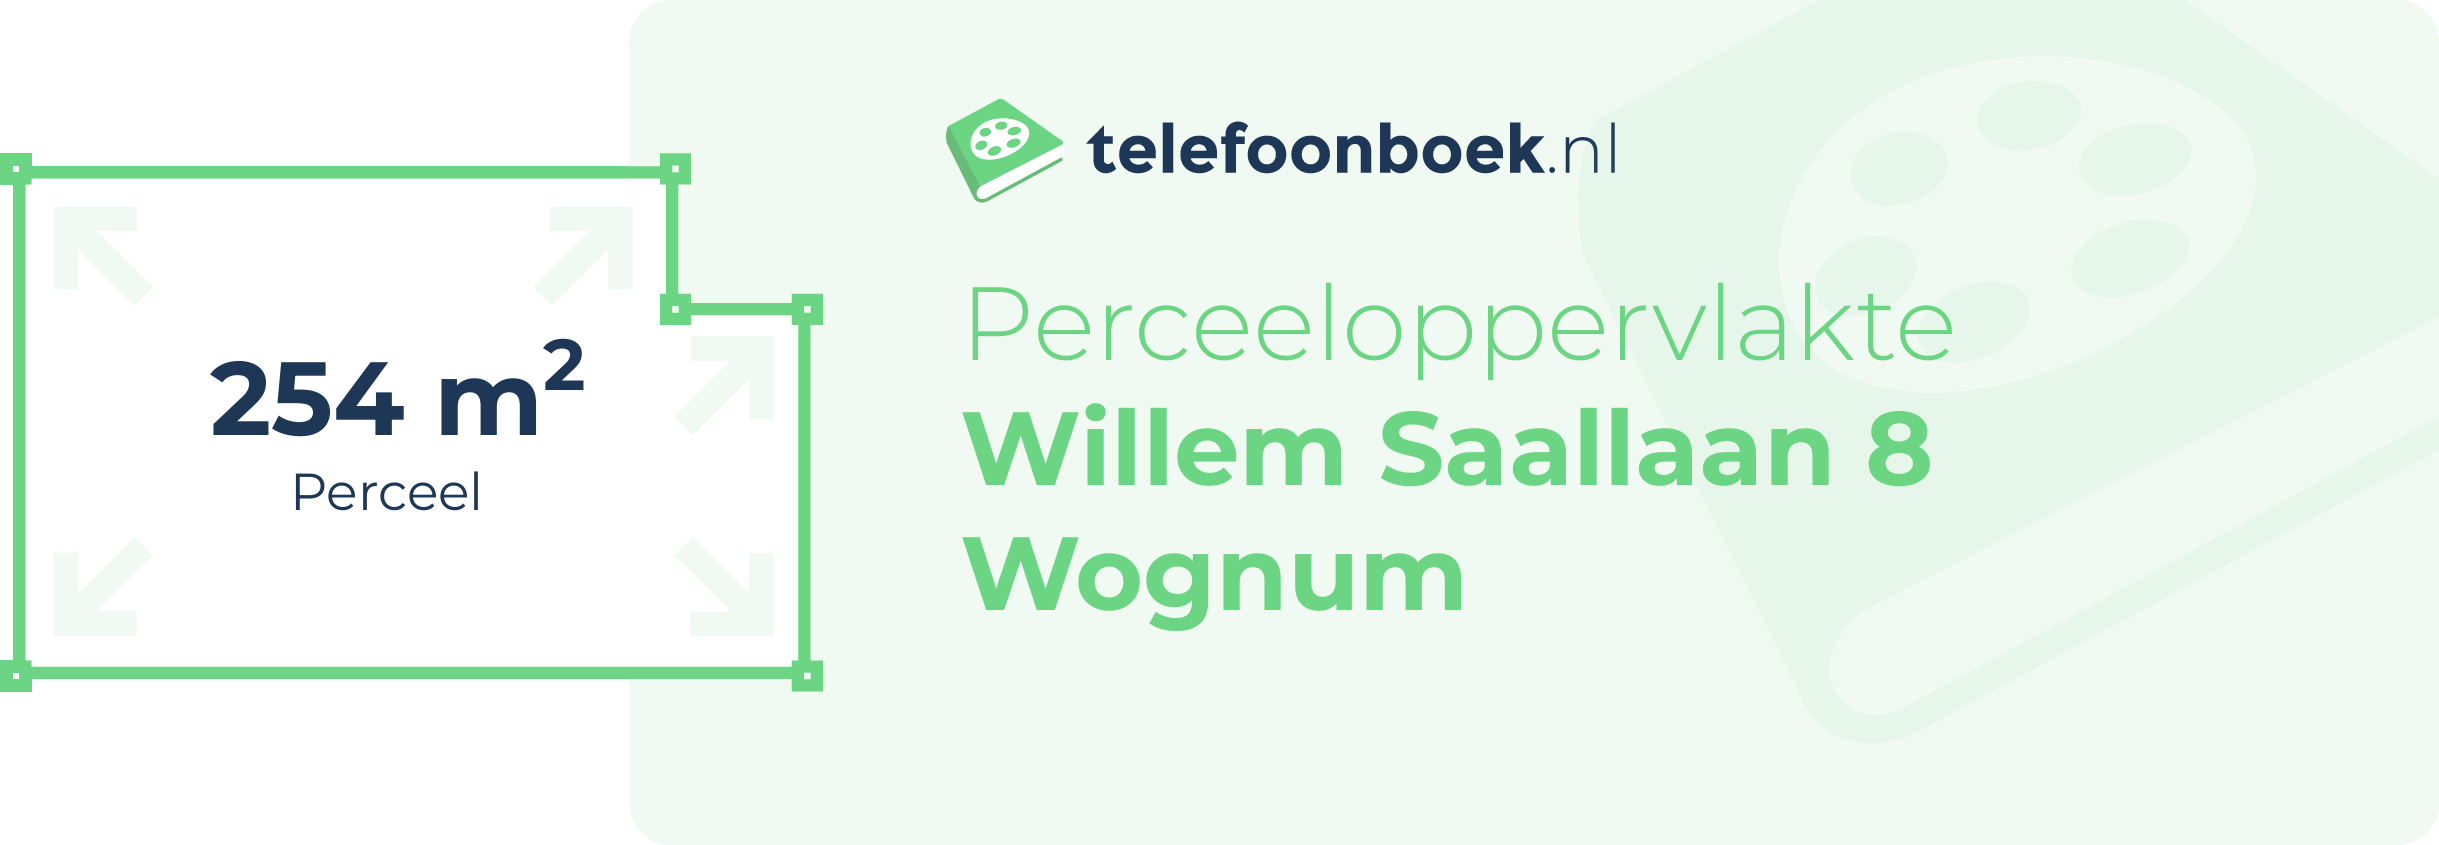 Perceeloppervlakte Willem Saallaan 8 Wognum